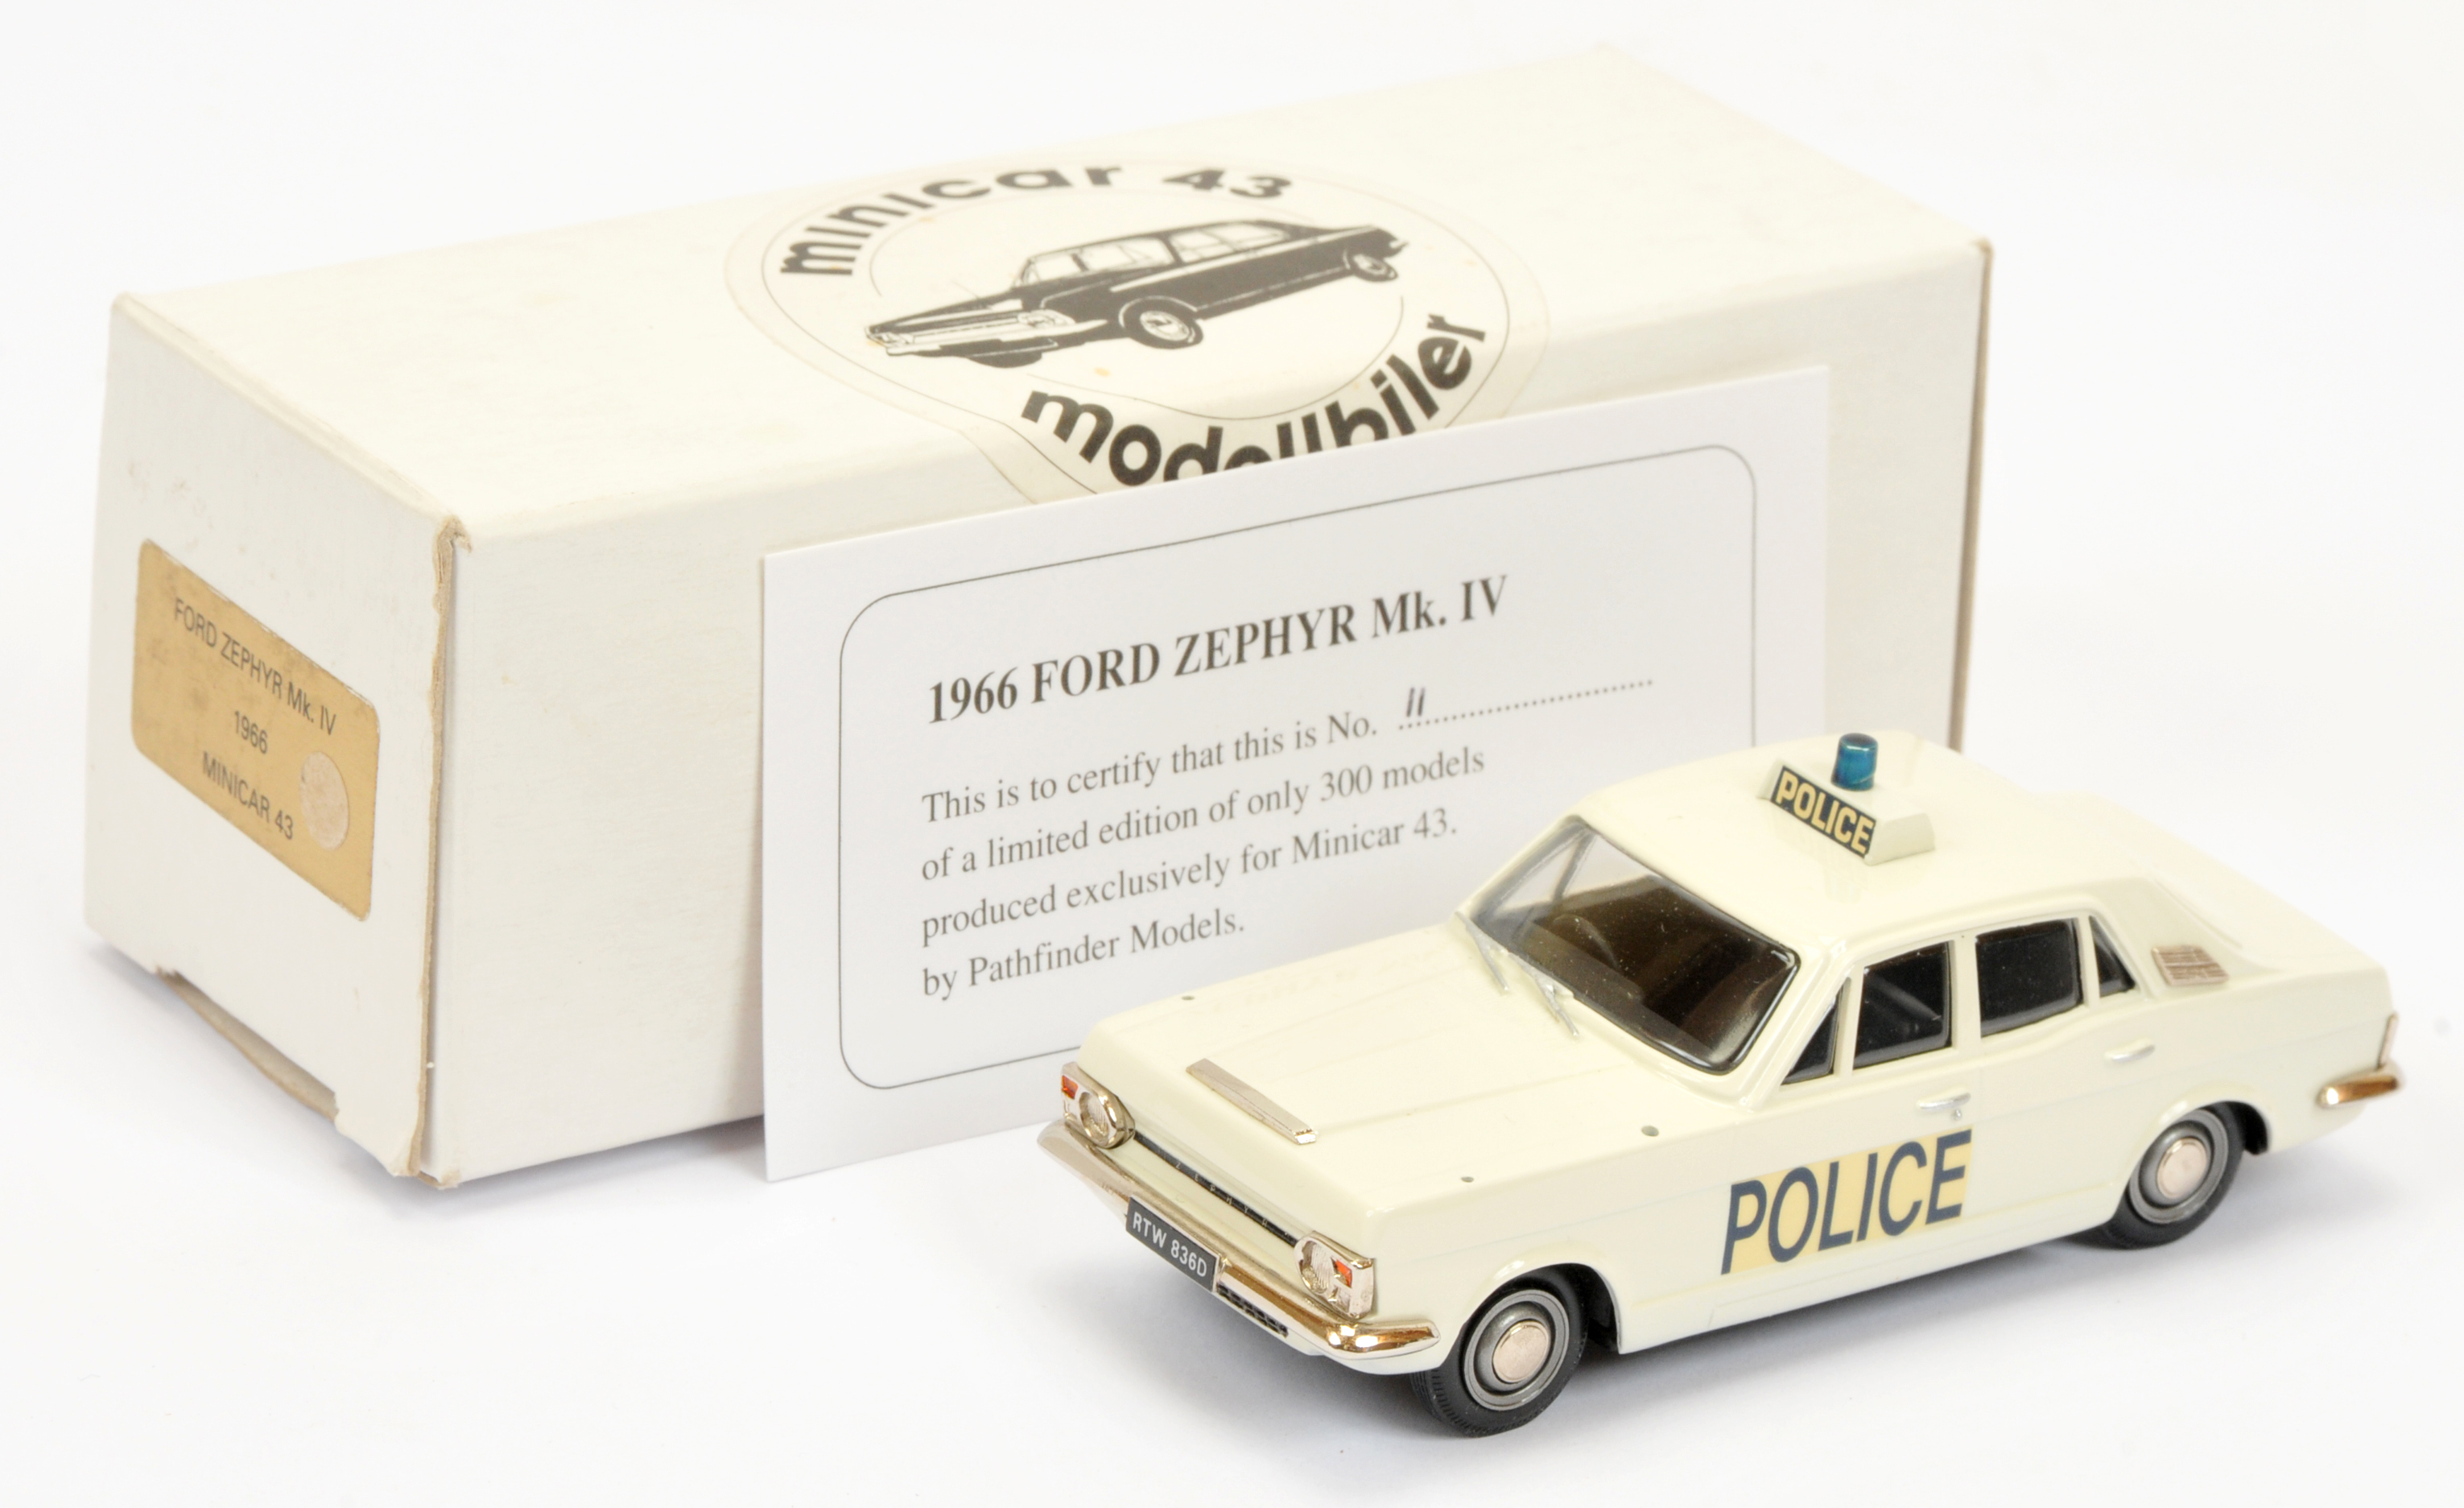 Minicar 43 (Pathfinder) Ford Zephyr 1966 "Police"